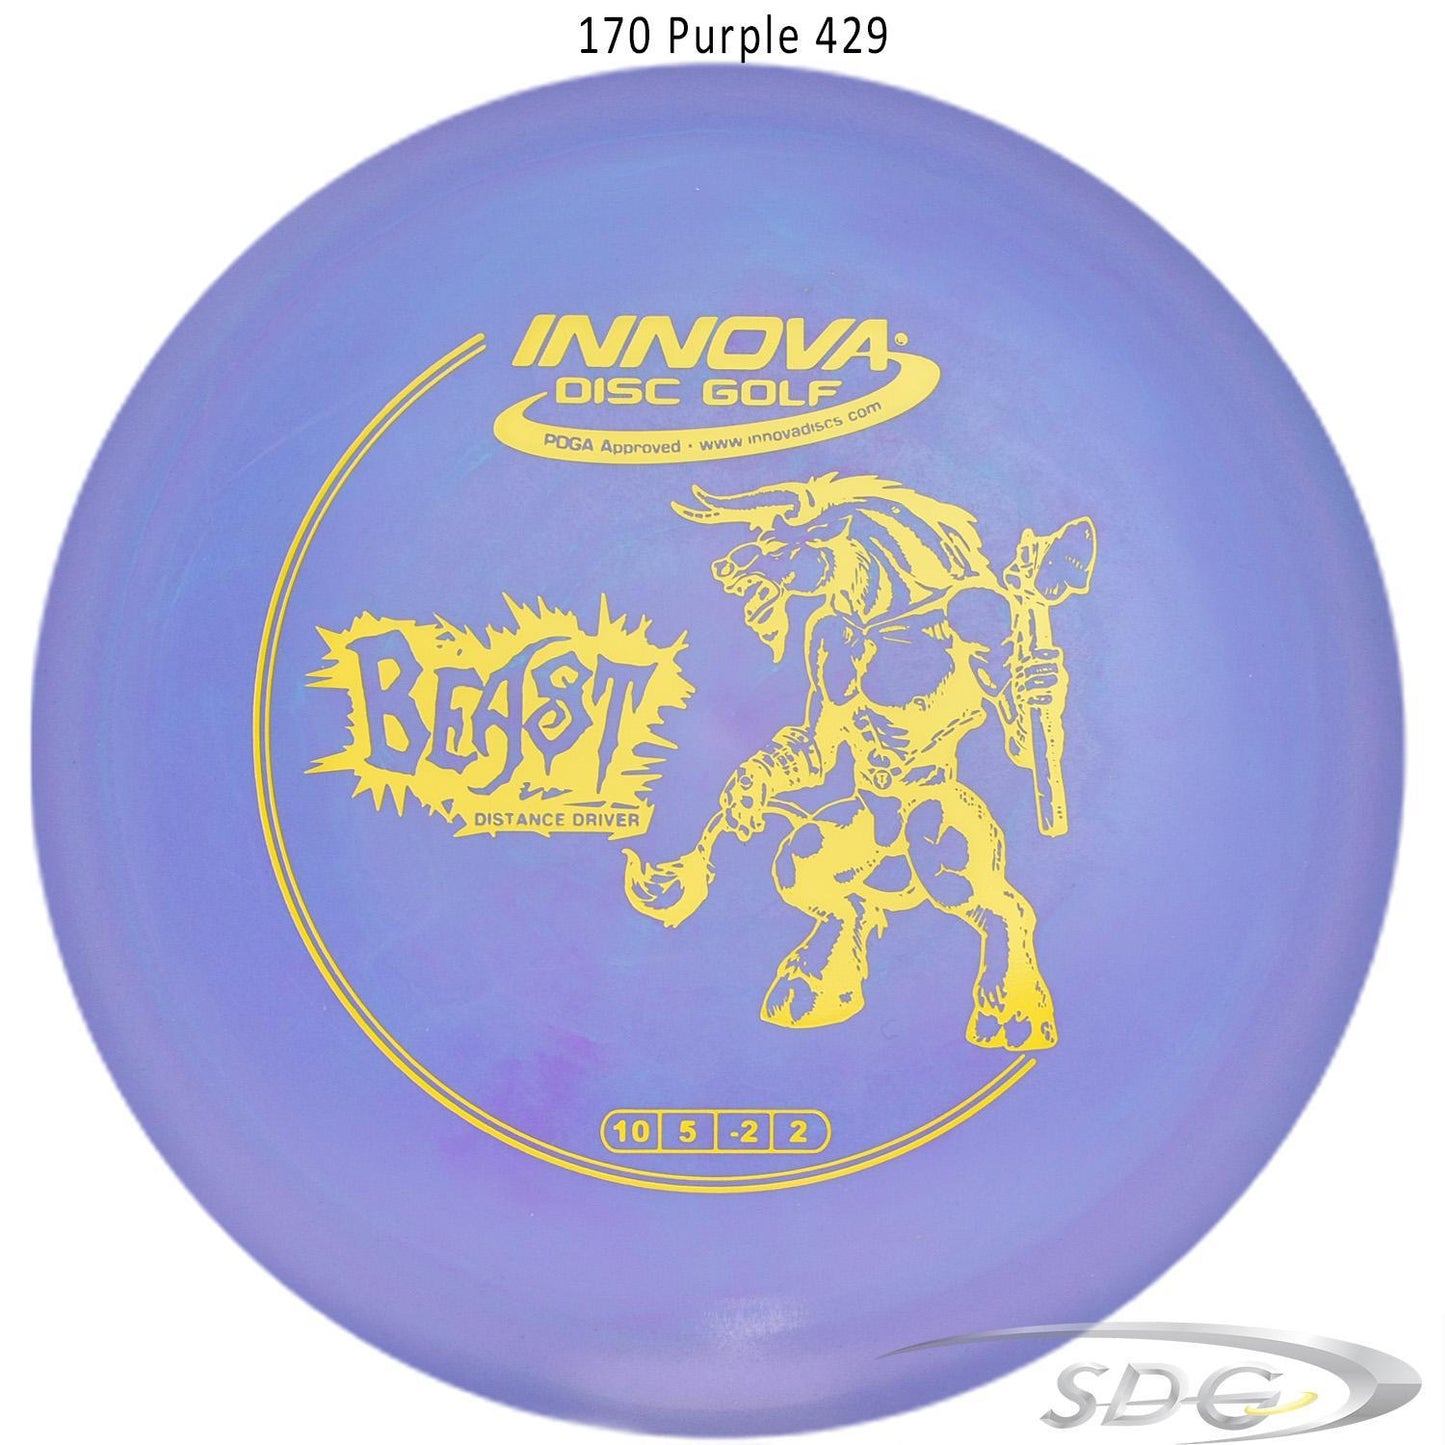 innova-dx-beast-disc-golf-distance-driver 170 Purple 429